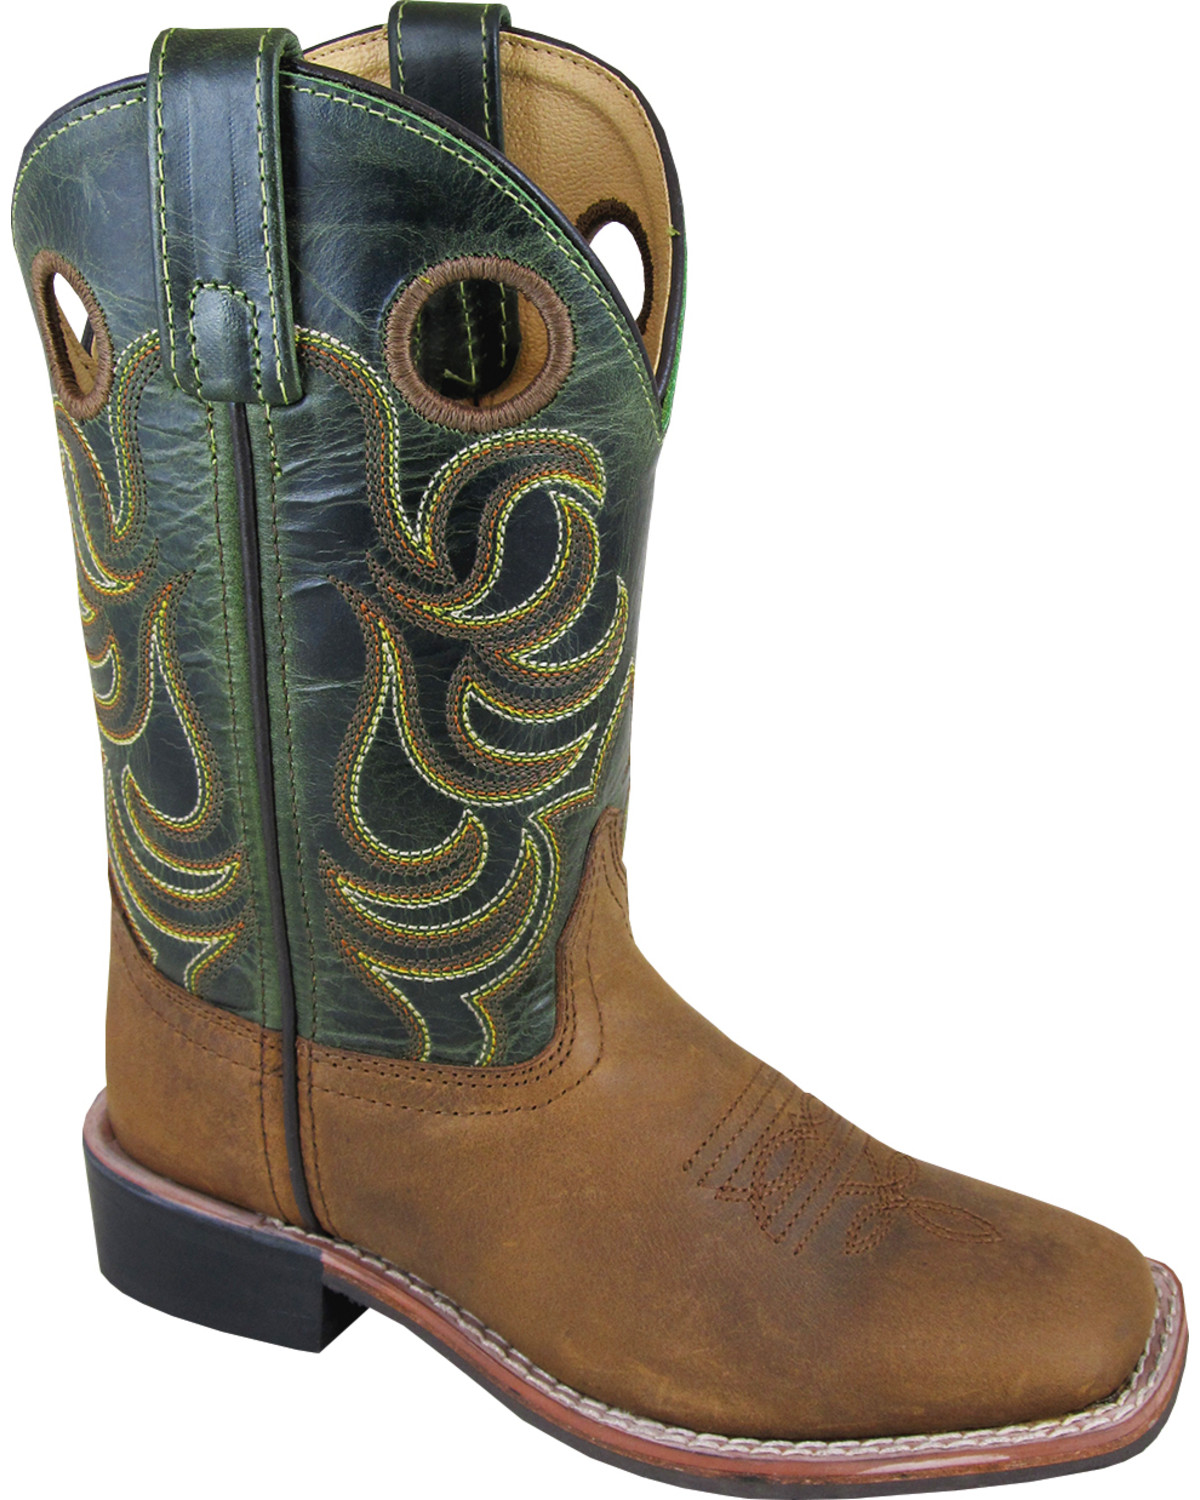 Smoky Mountain Boys' Green Jesse Western Boots - Square Toe